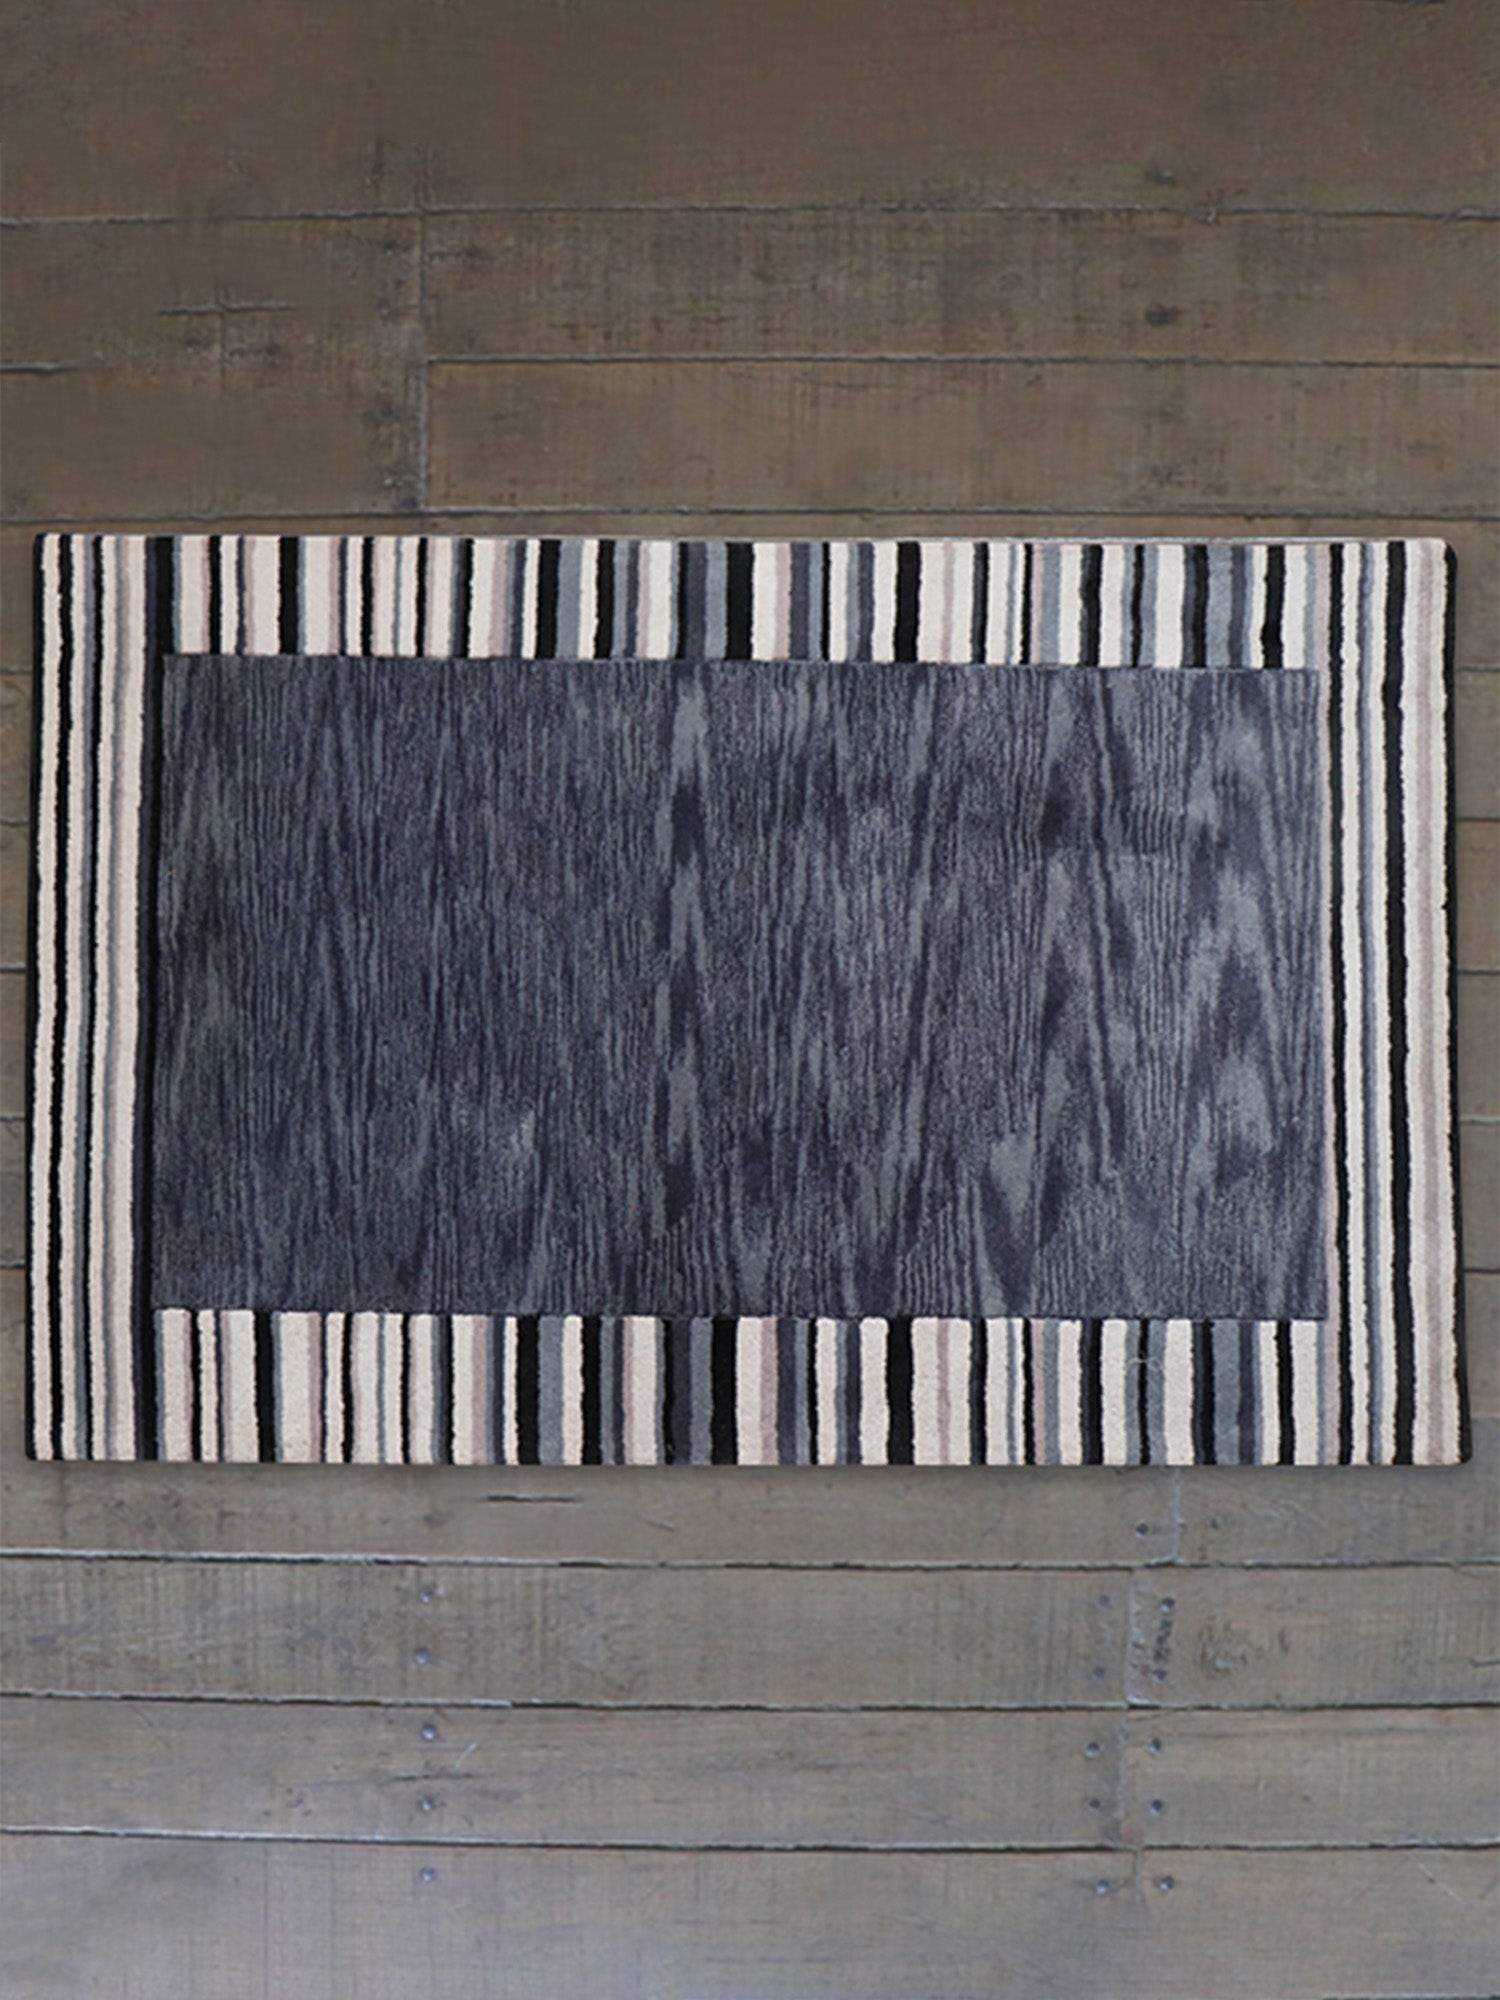 Carpet Hand Tufted 100% Woollen Grey Border Stripes - 4ft X 6ft